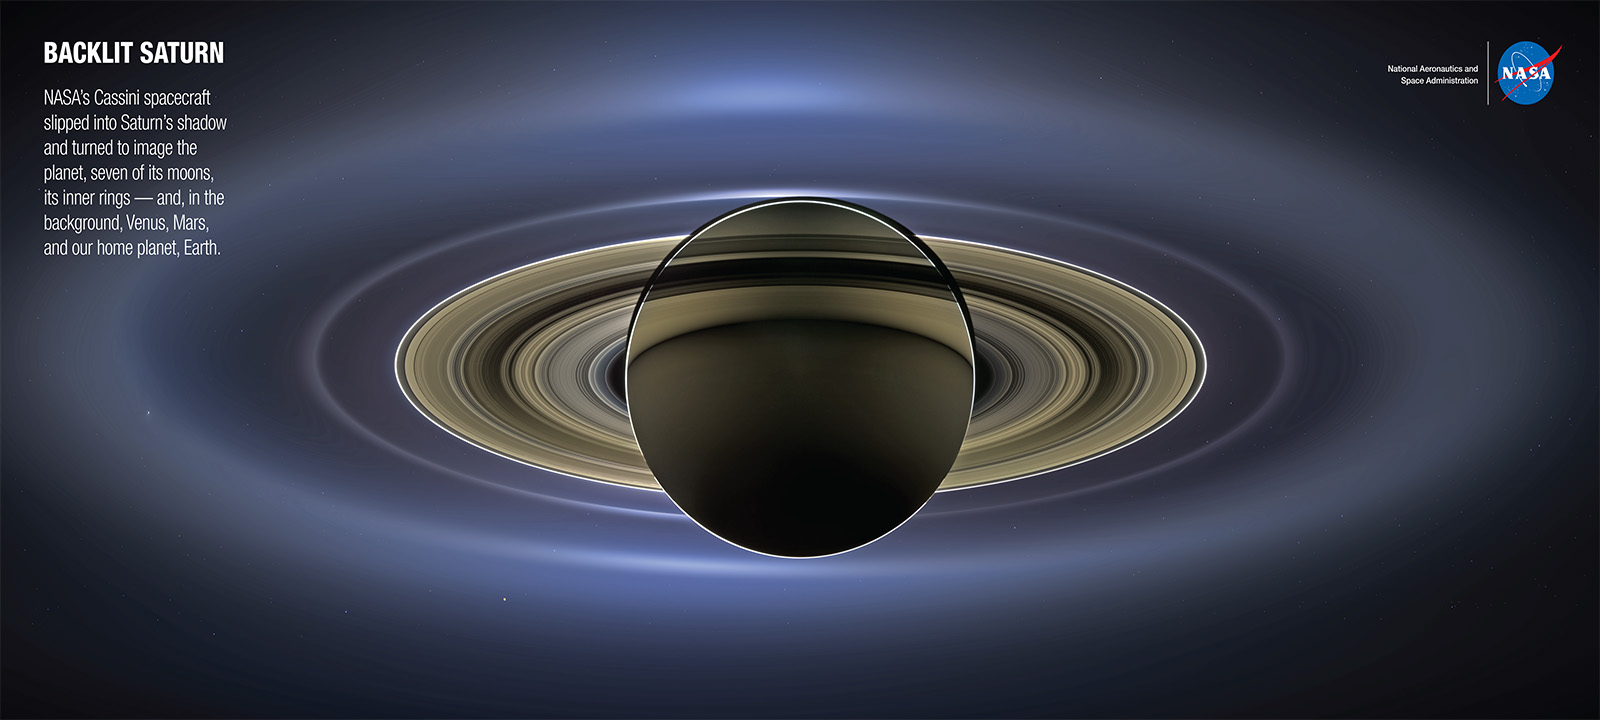 A poster version of Cassini's famous backlit Saturn image.